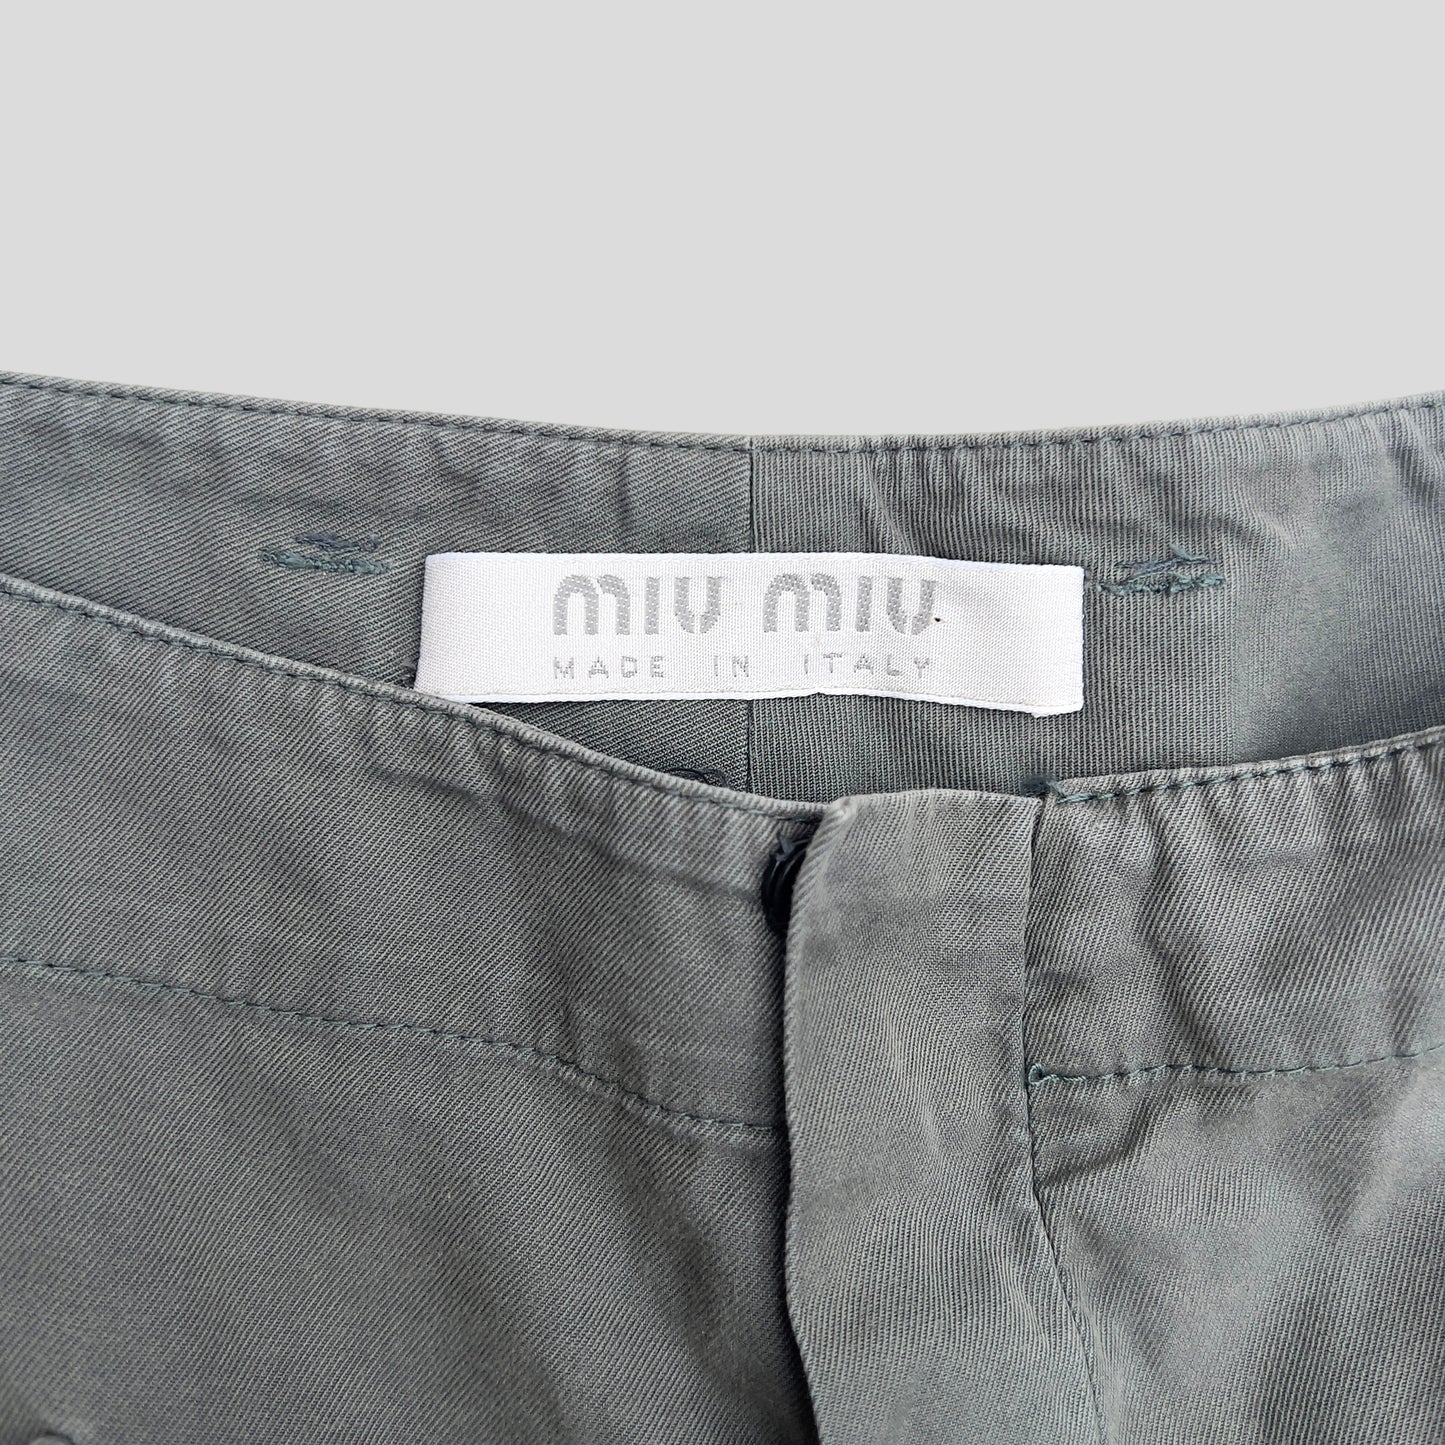 Miu Miu 2001 SS low waist pocket shorts